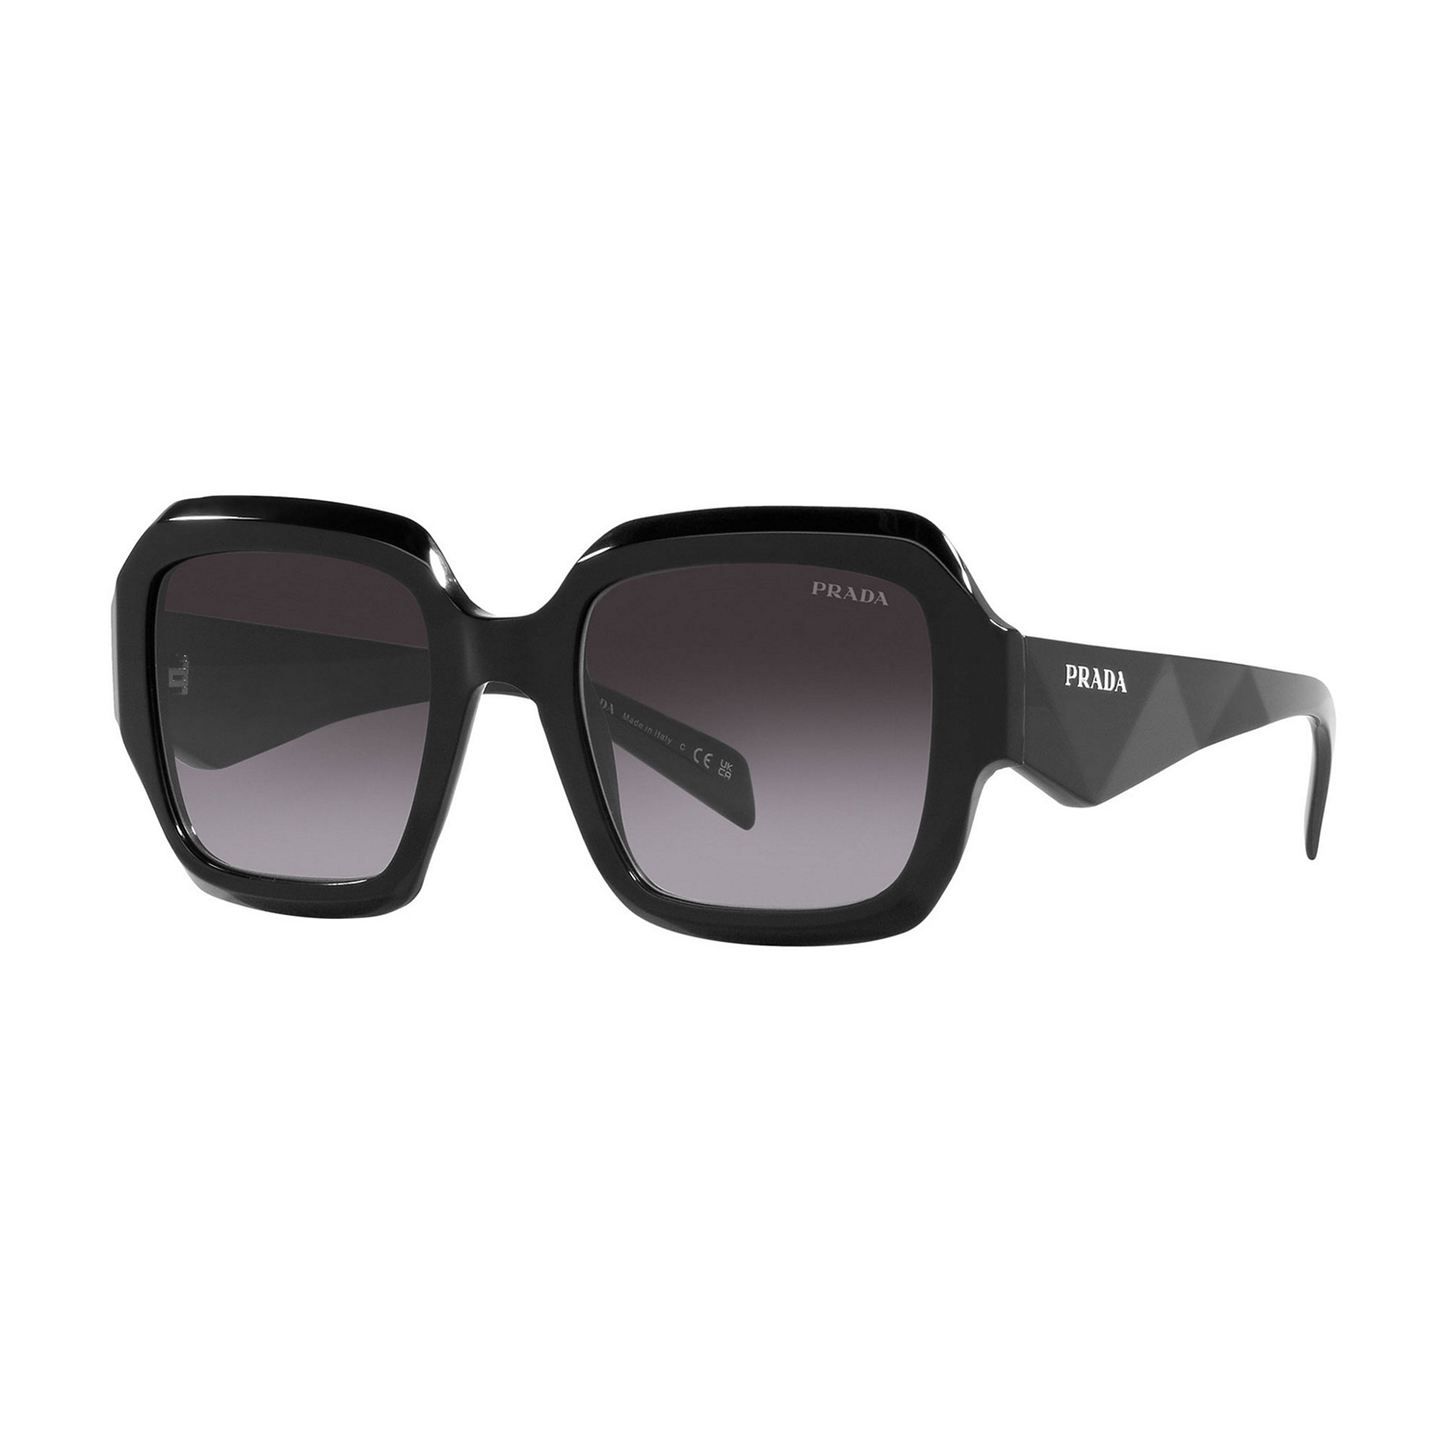 Prada Women's Pillow Black Sunglasses